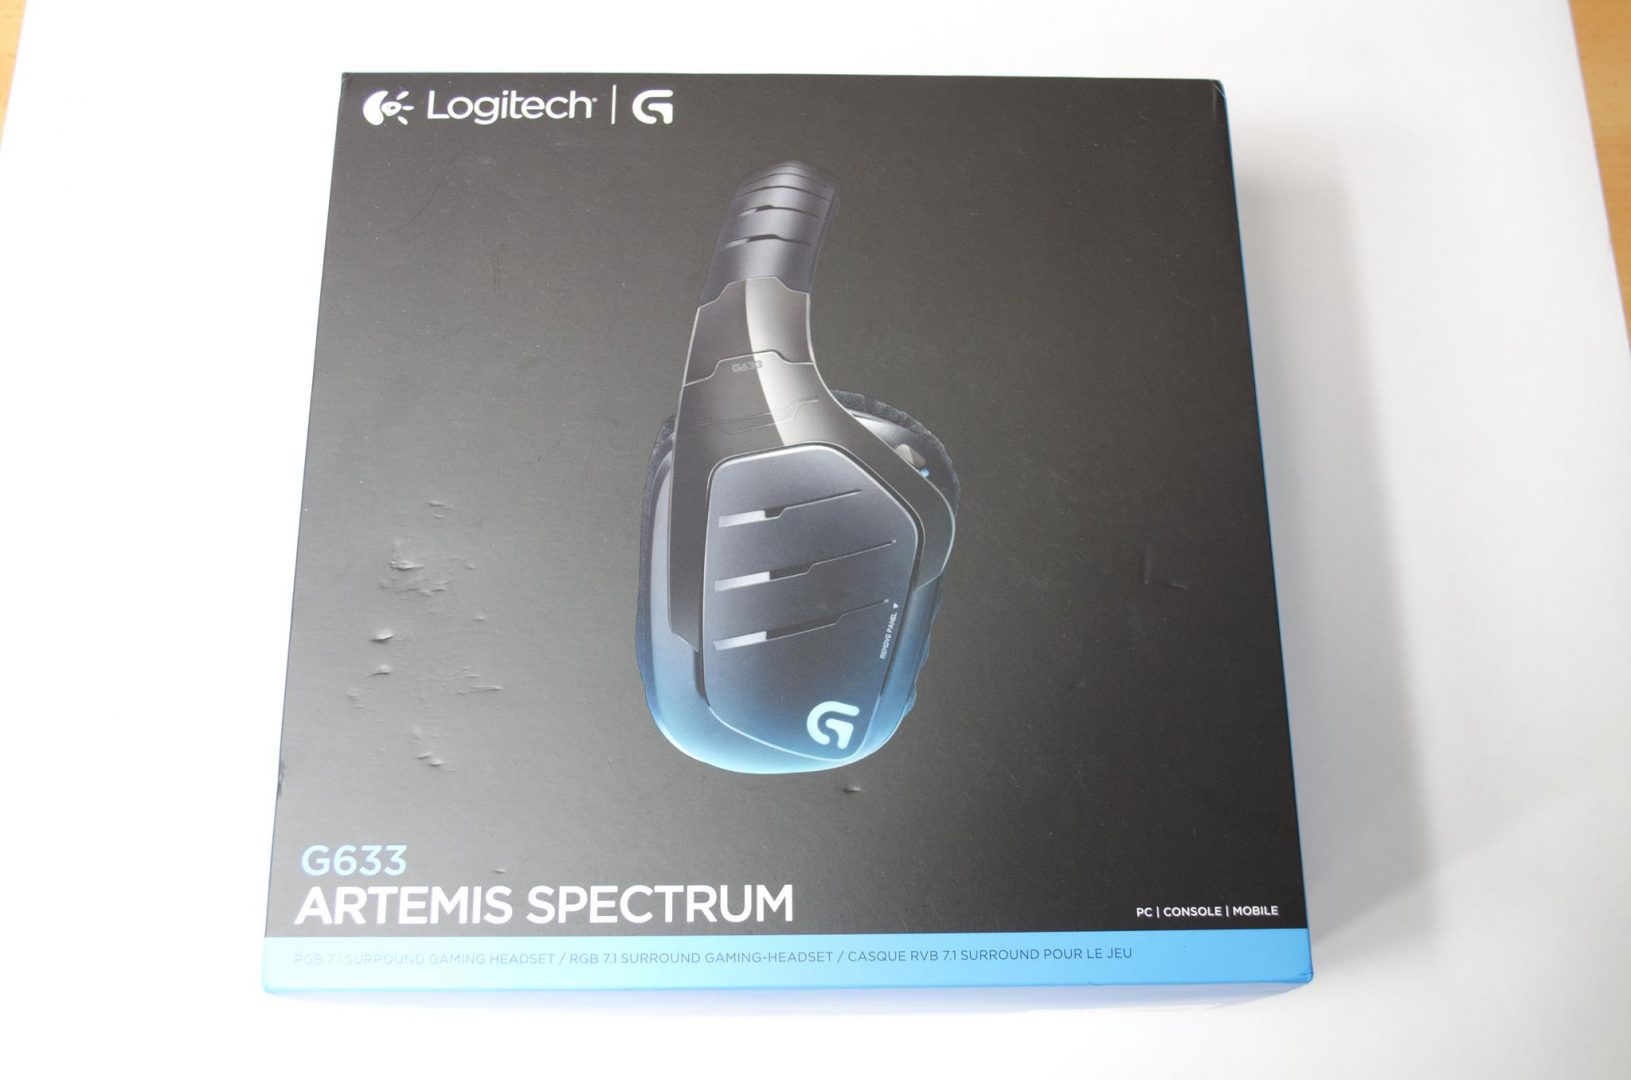 Logitech G633 artemis spectrum rgb 7.1 surround gaming headset review